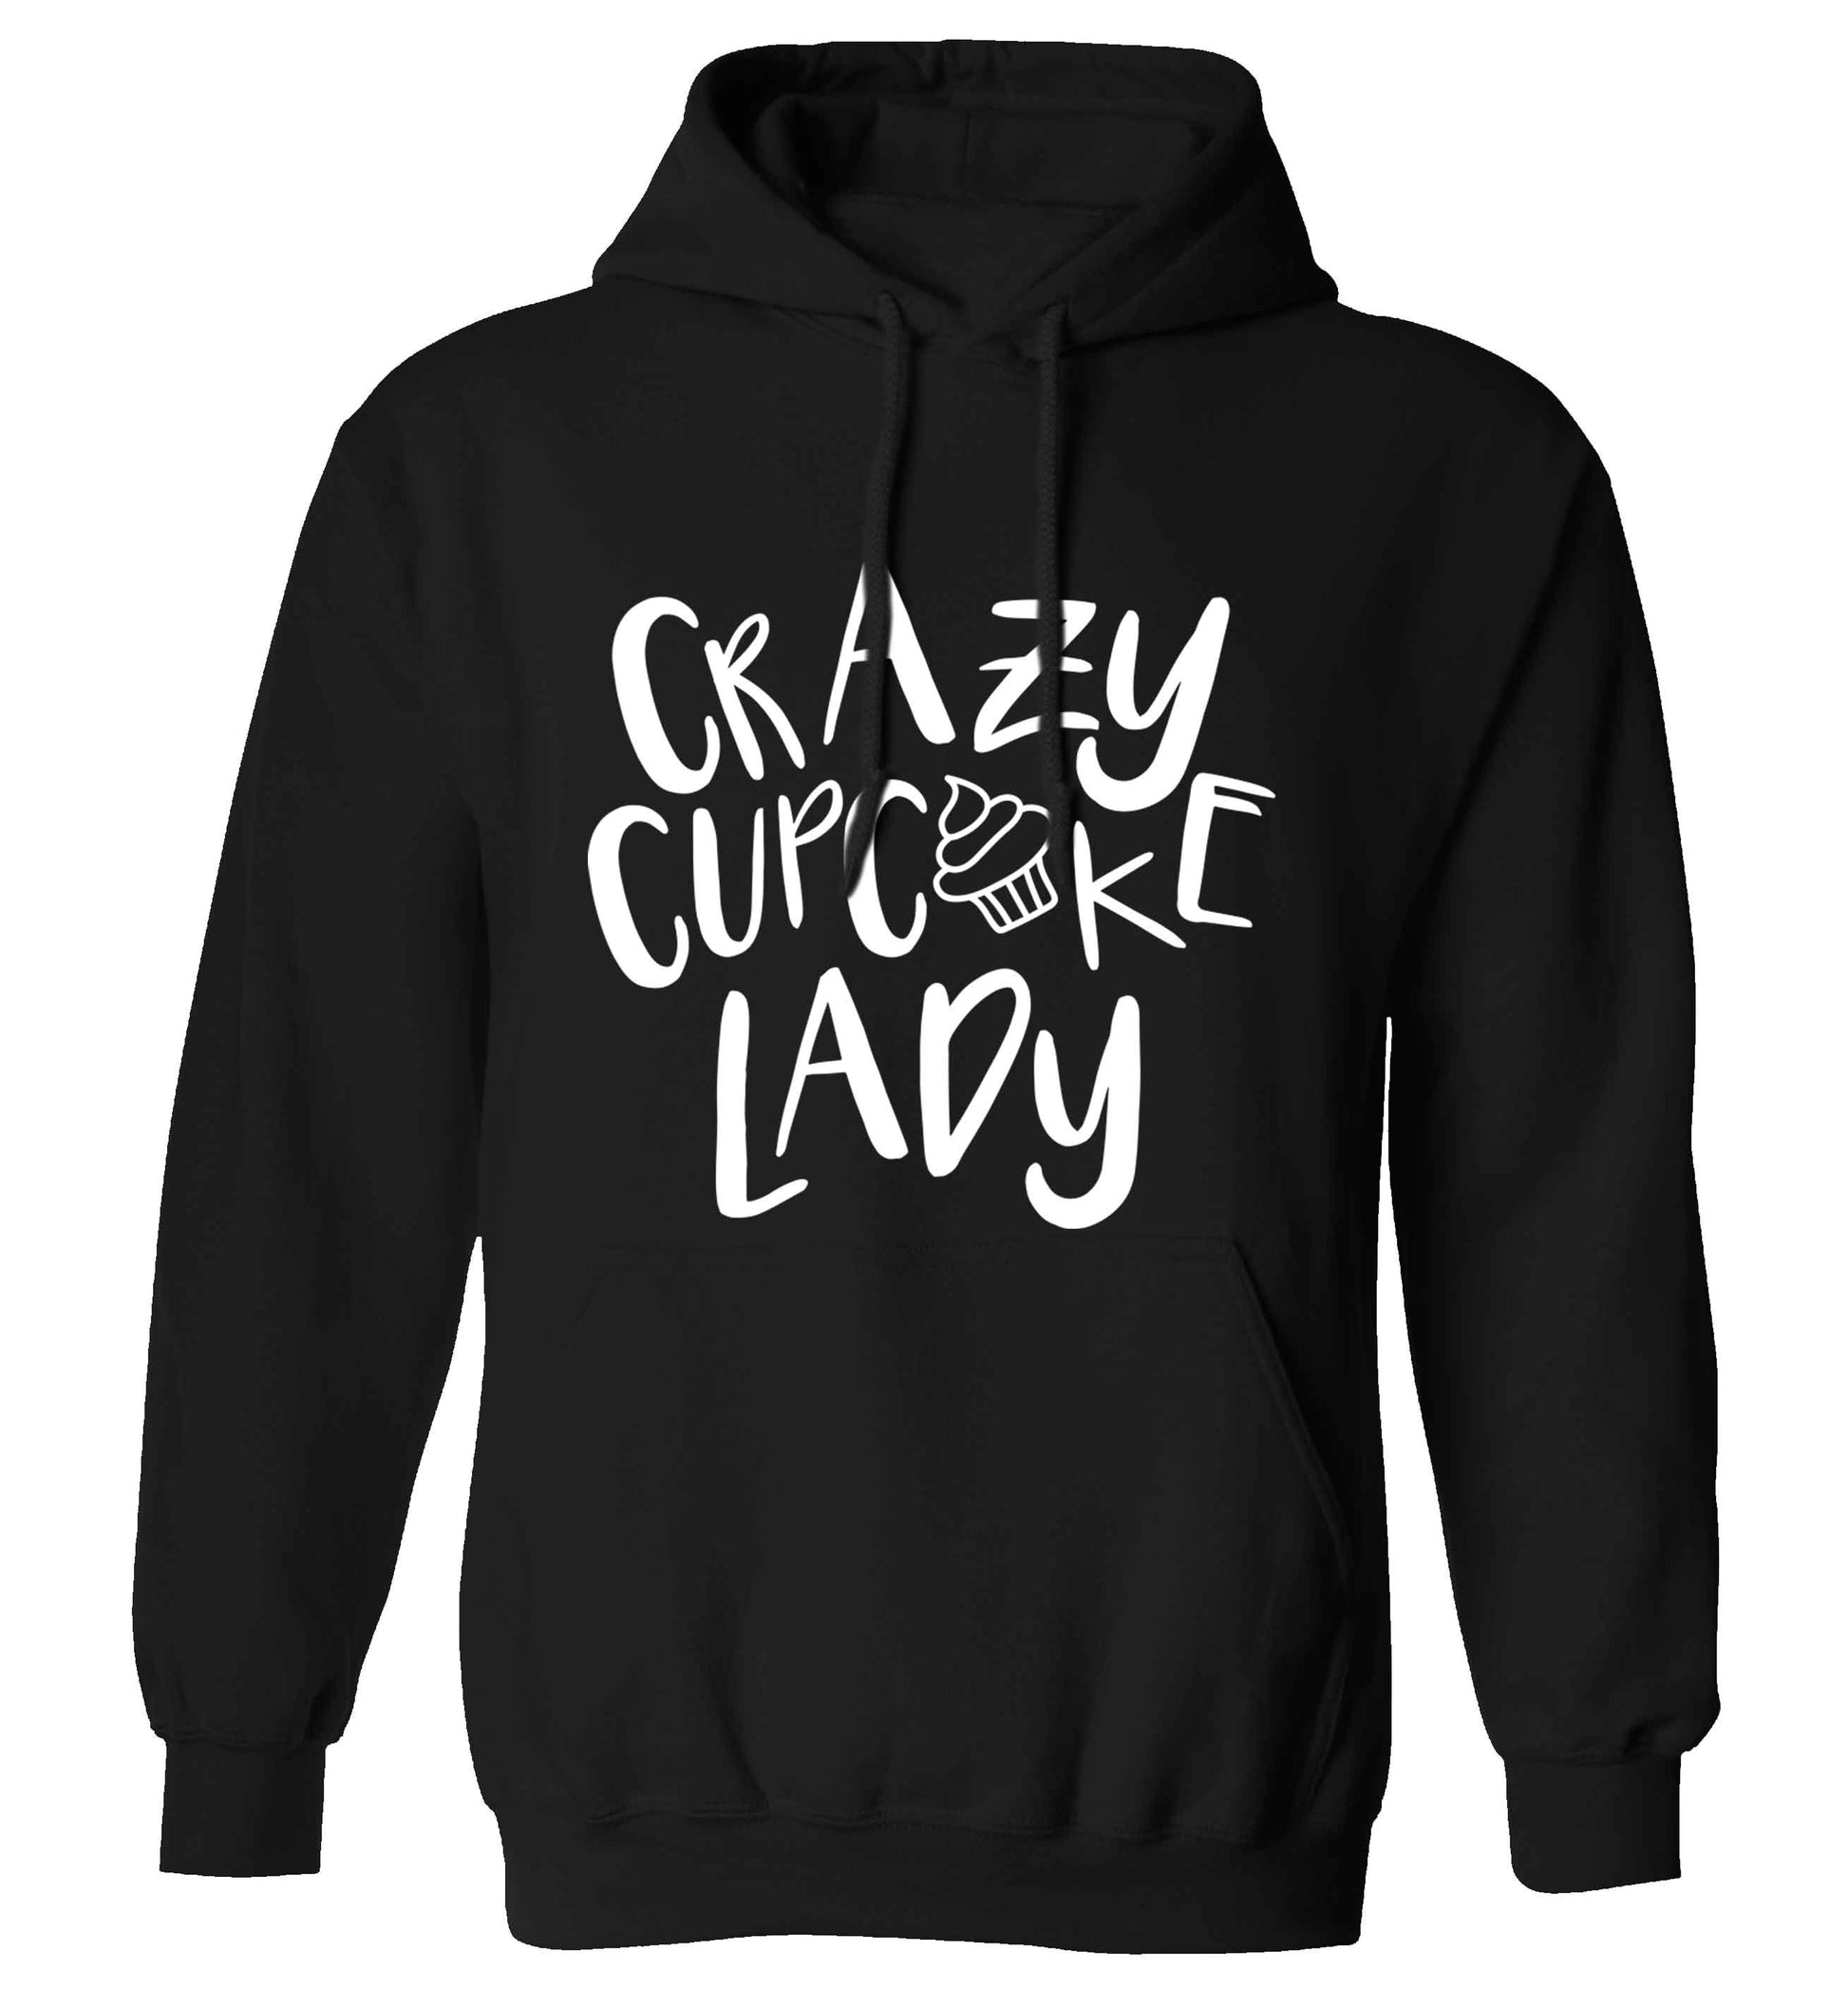 Crazy cupcake lady adults unisex black hoodie 2XL